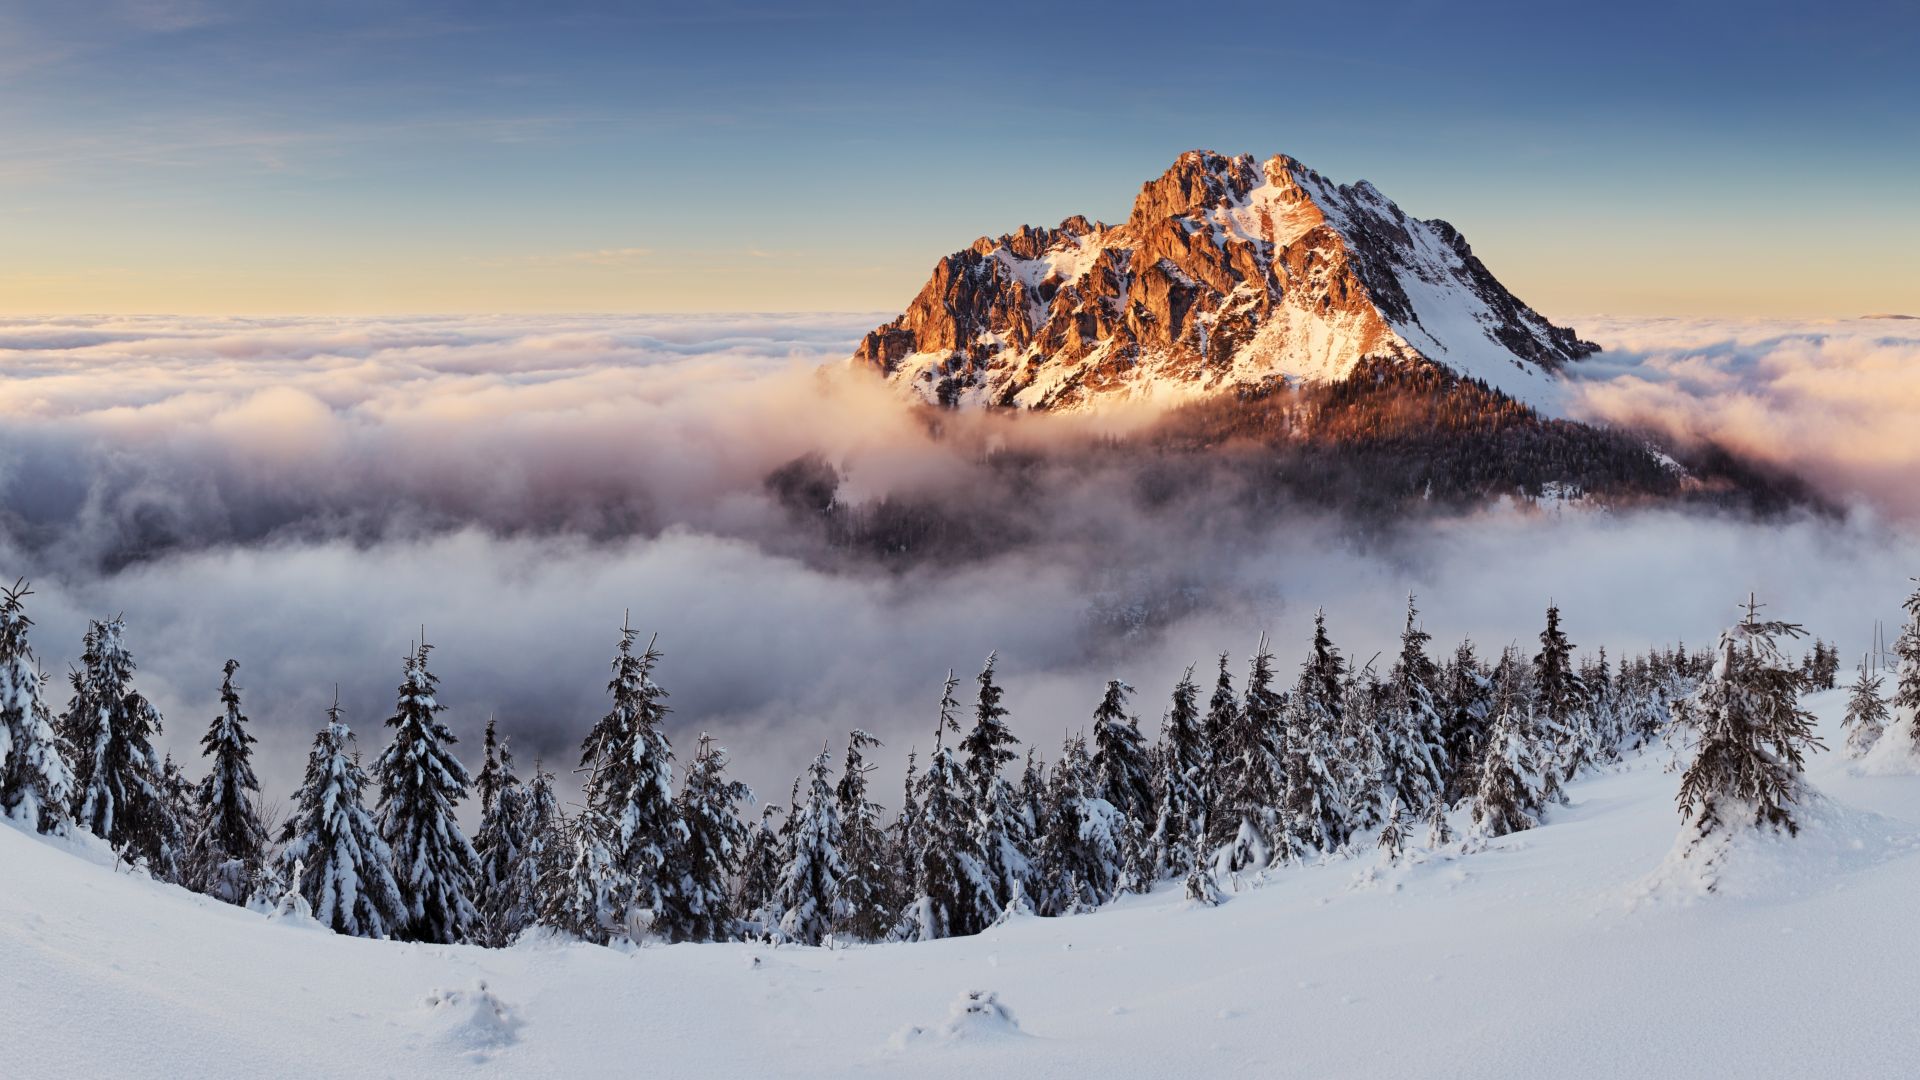 Словакия, 4k, 5k, горы, туман, сосны, снег, Slovakia, 4k, 5k wallpaper, 8k, mountains, fog, pines, snow (horizontal)